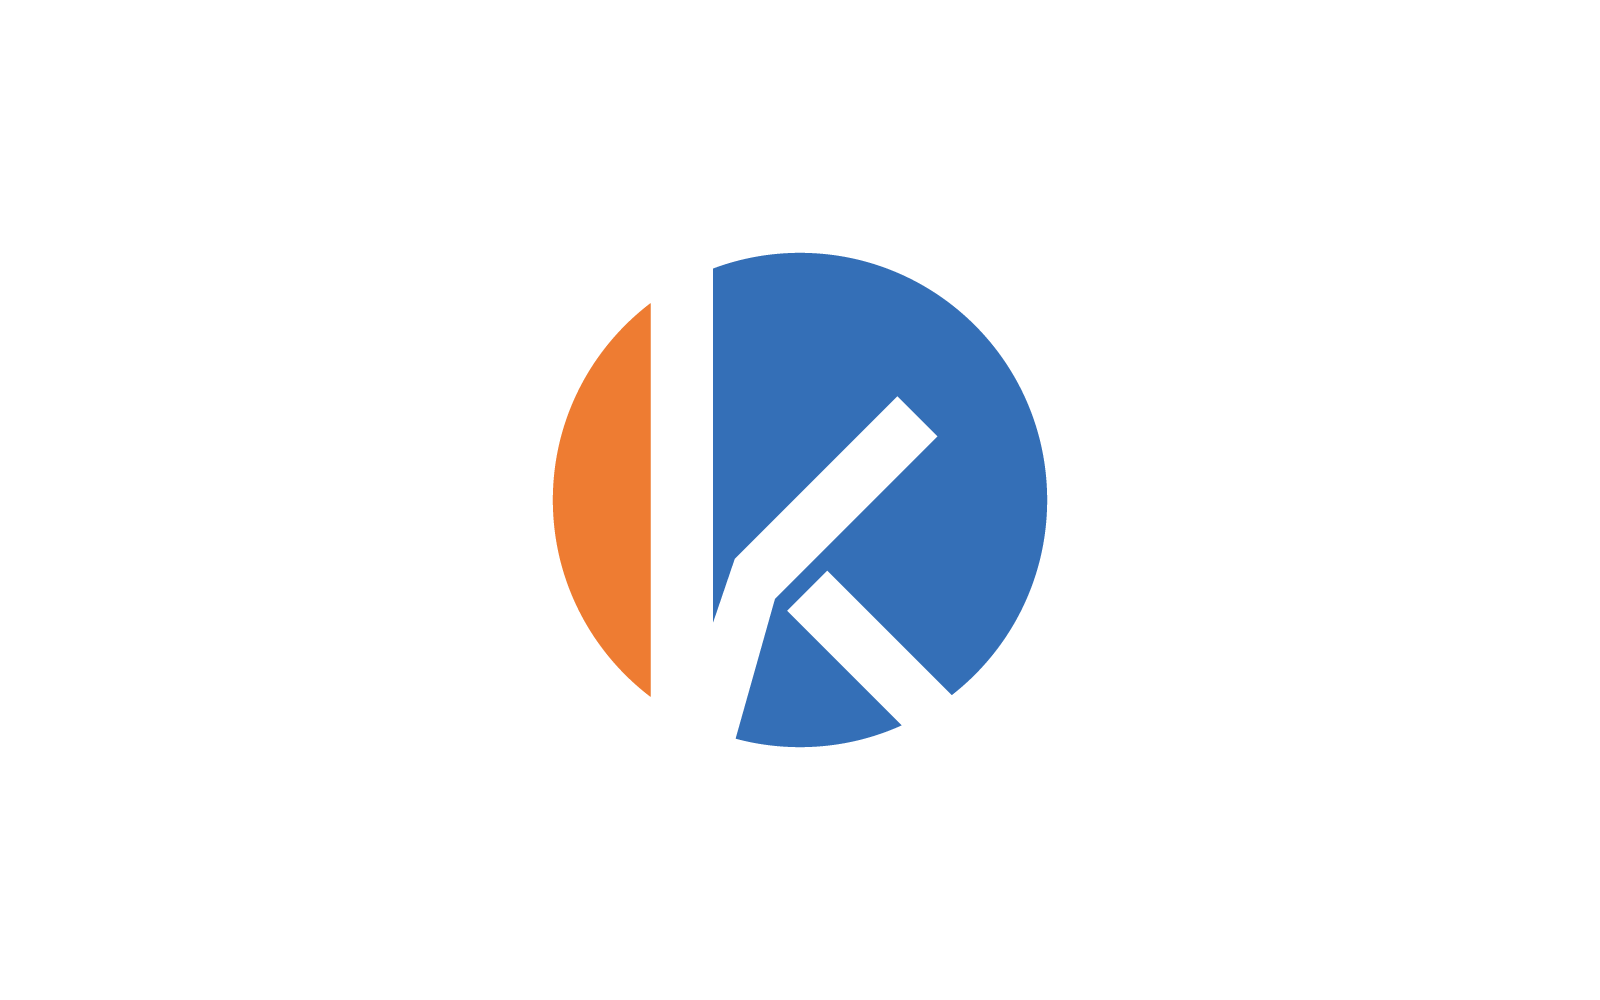 K initial letter logo vector flat design illustration template